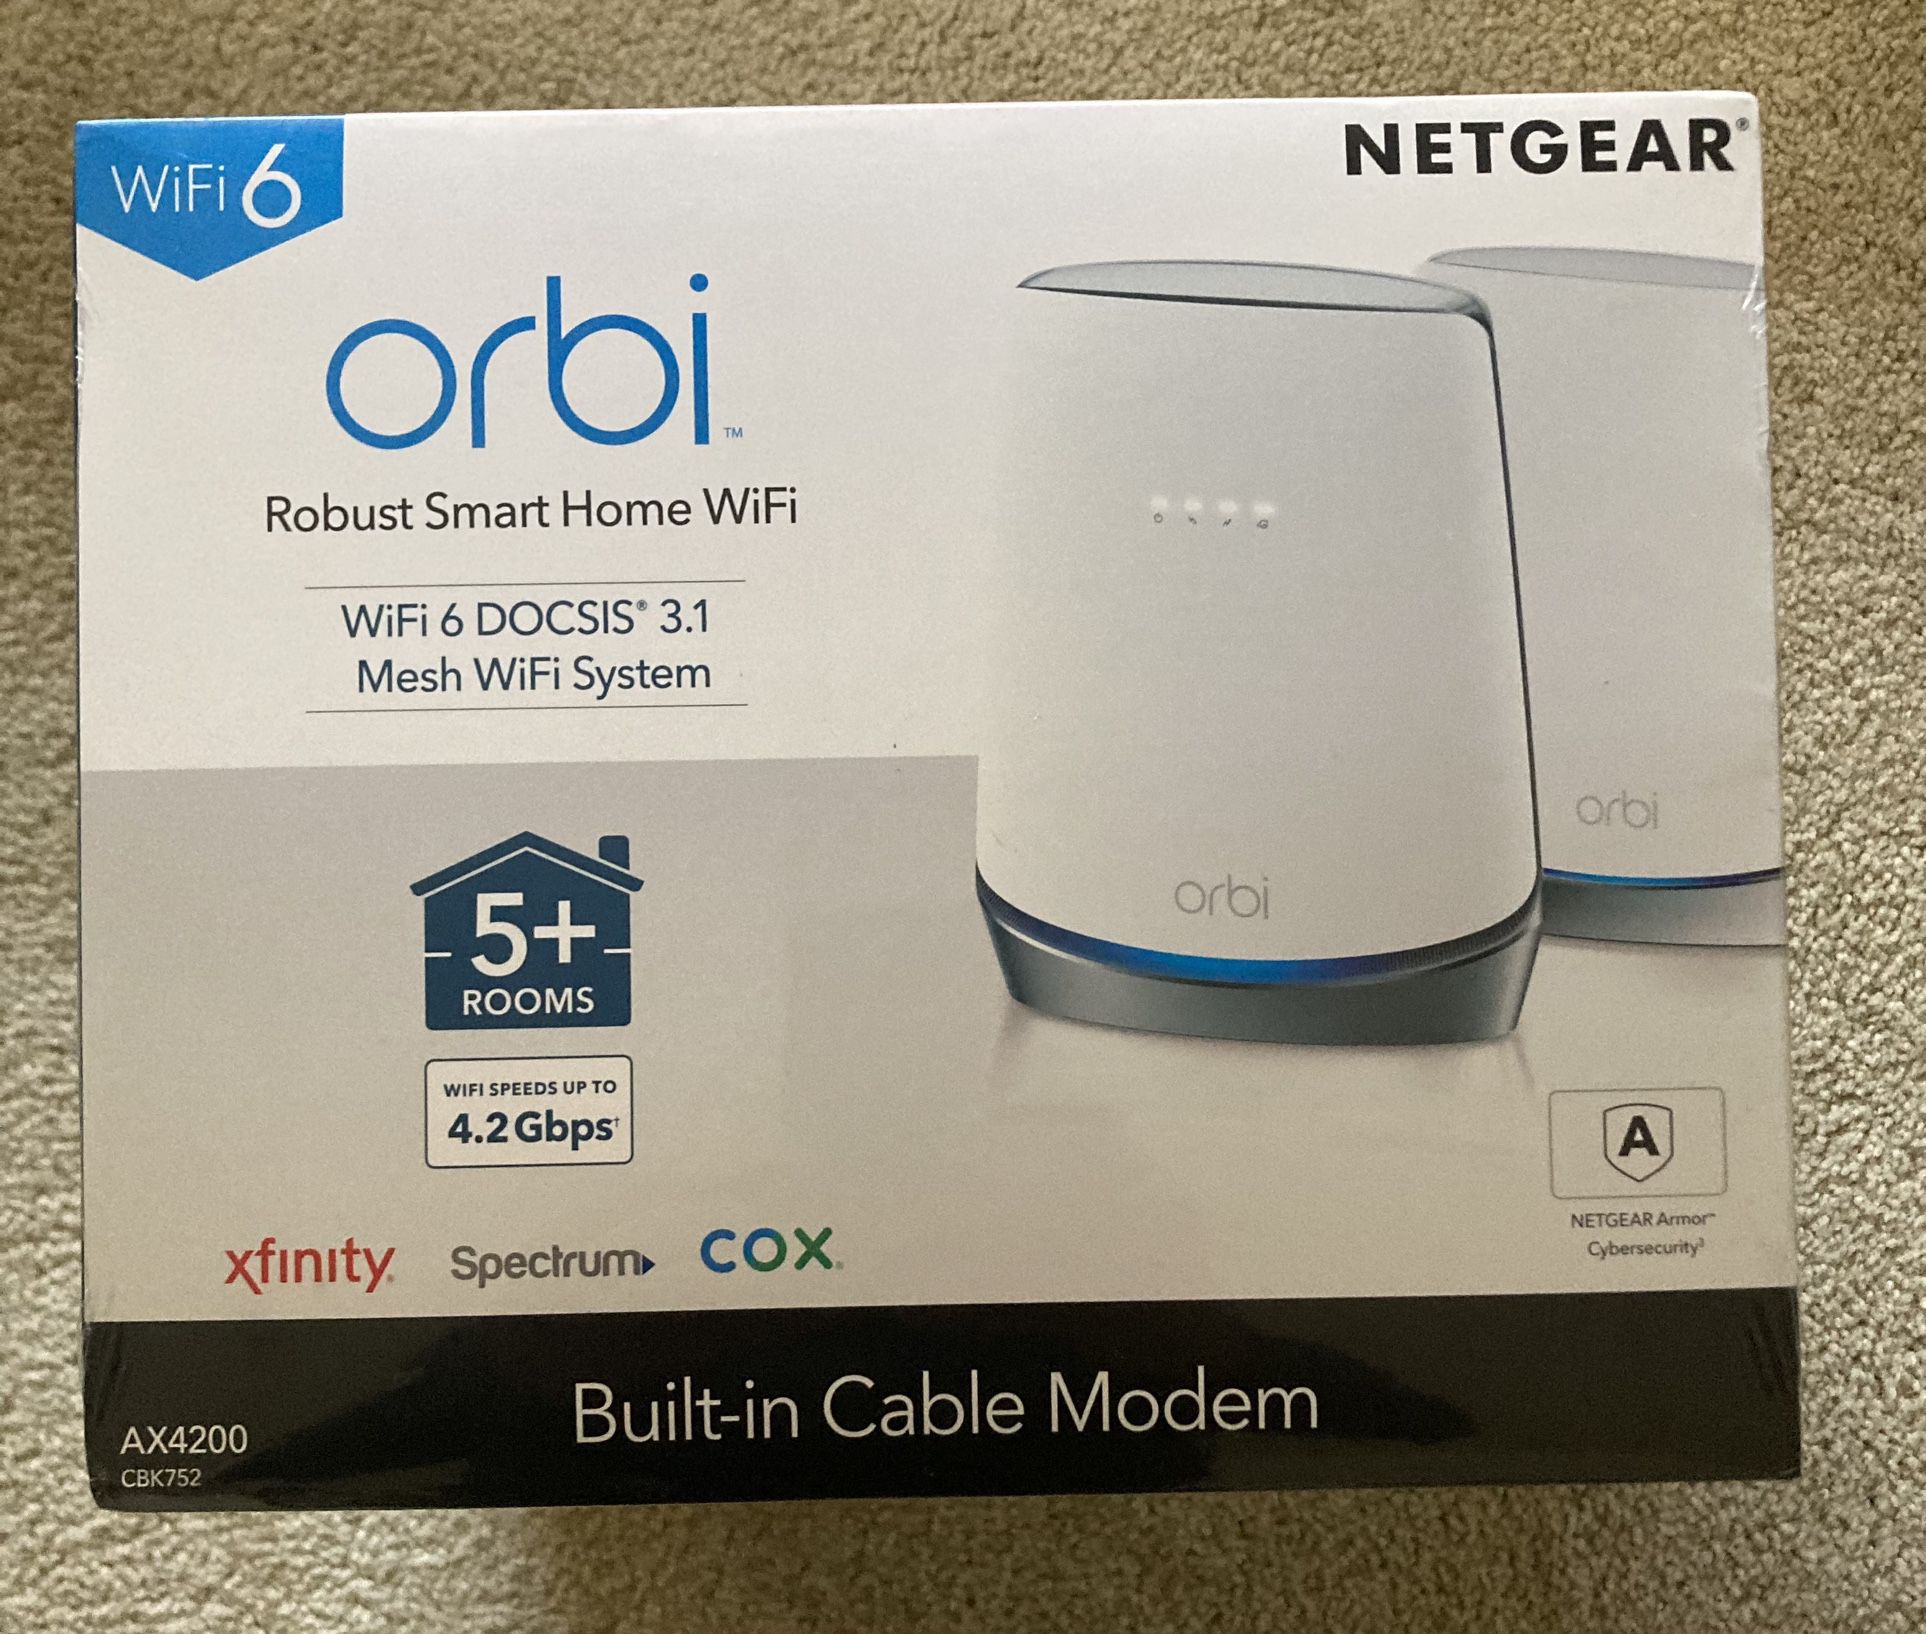 Netgear Orbi AX4200 WiFi 6 DOCSIS 3.1 Mesh Smart Home WiFi w/Built-in Cable Modem 